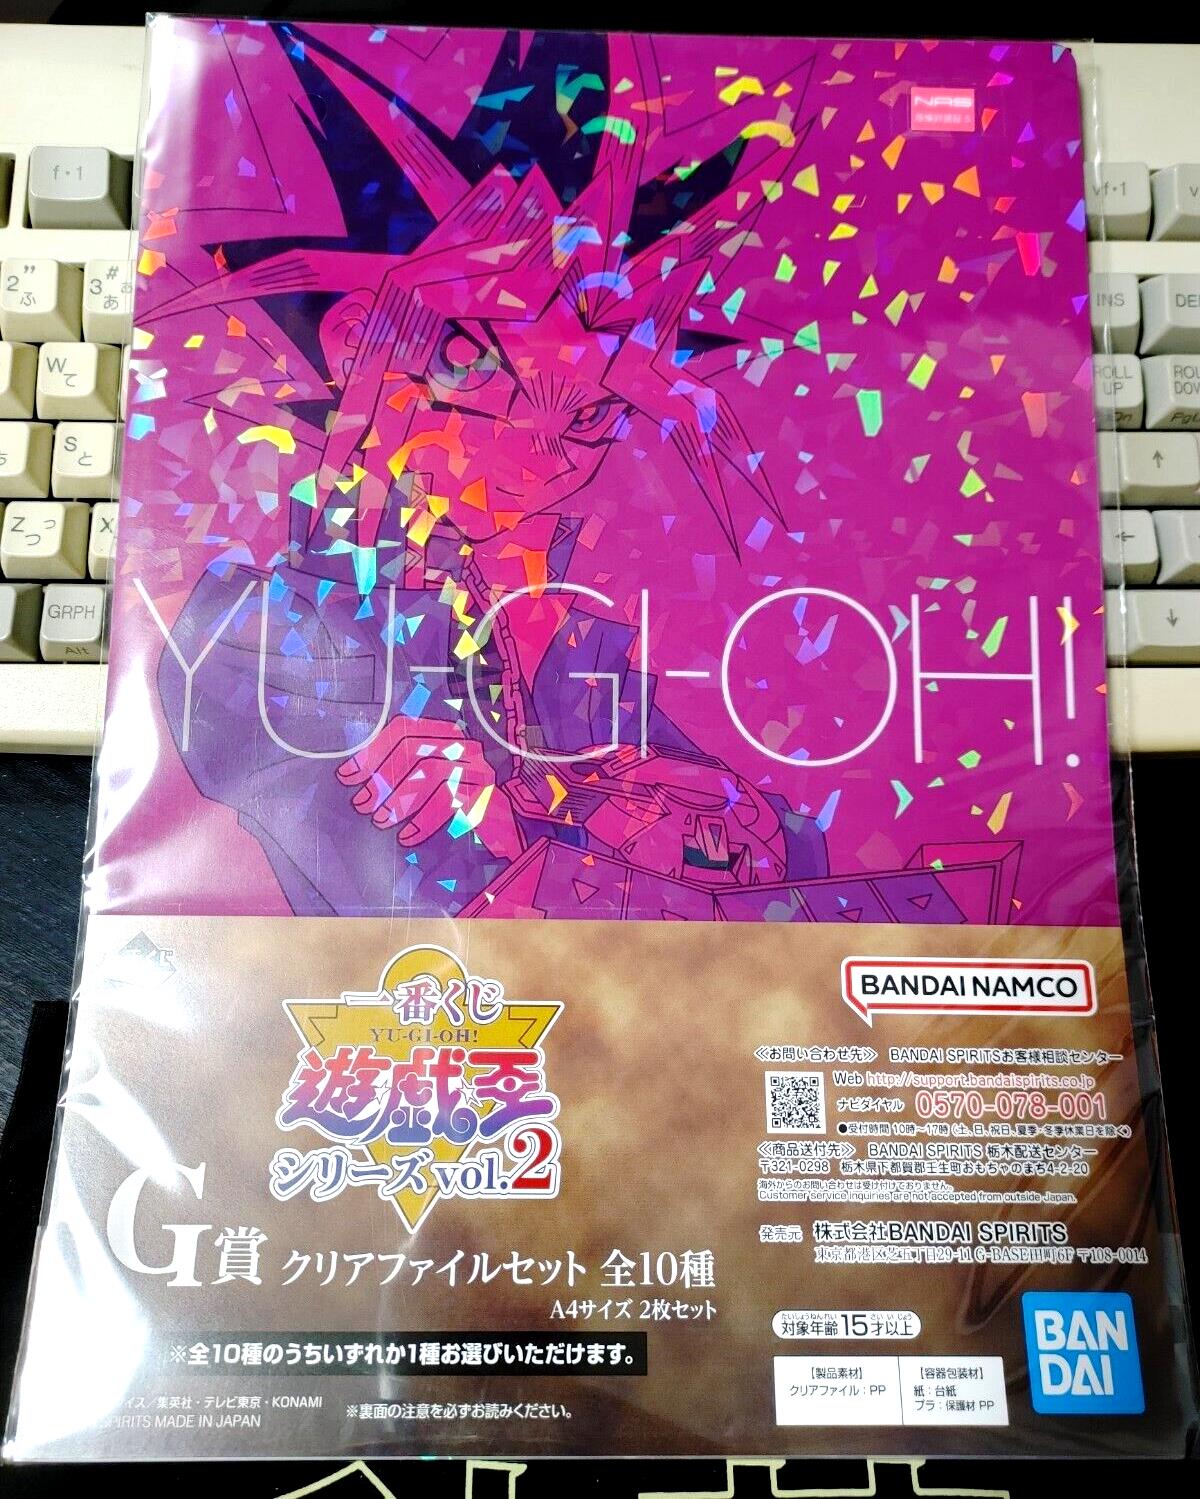 Yu-Gi-Oh Graphic Clear File Set Japan Release Yami Yugi